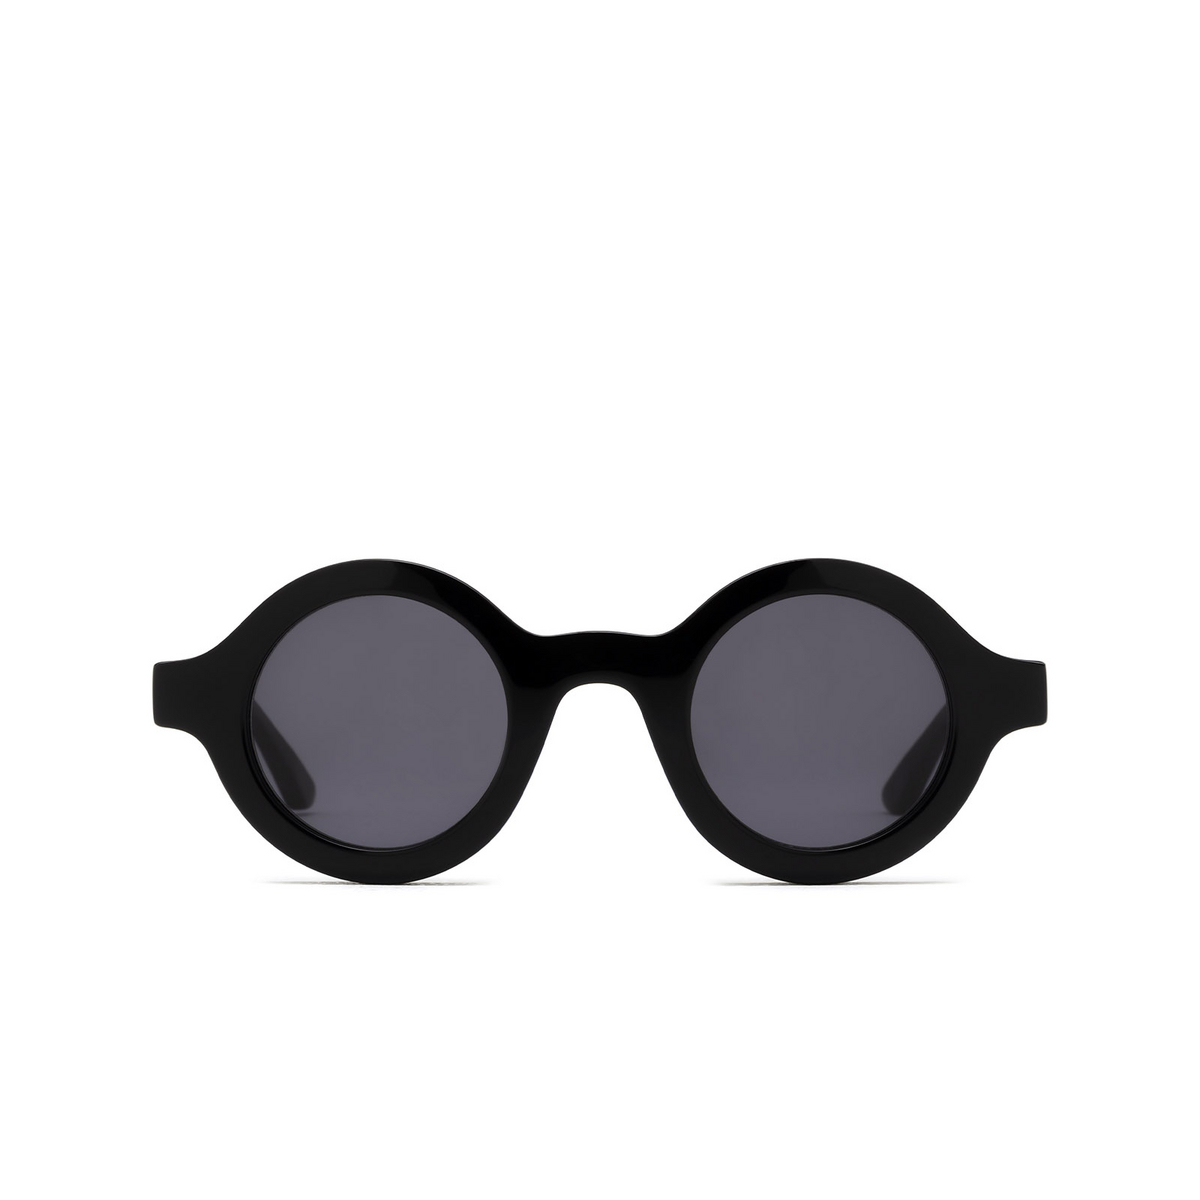 Huma MYO Sunglasses 06 Black - front view